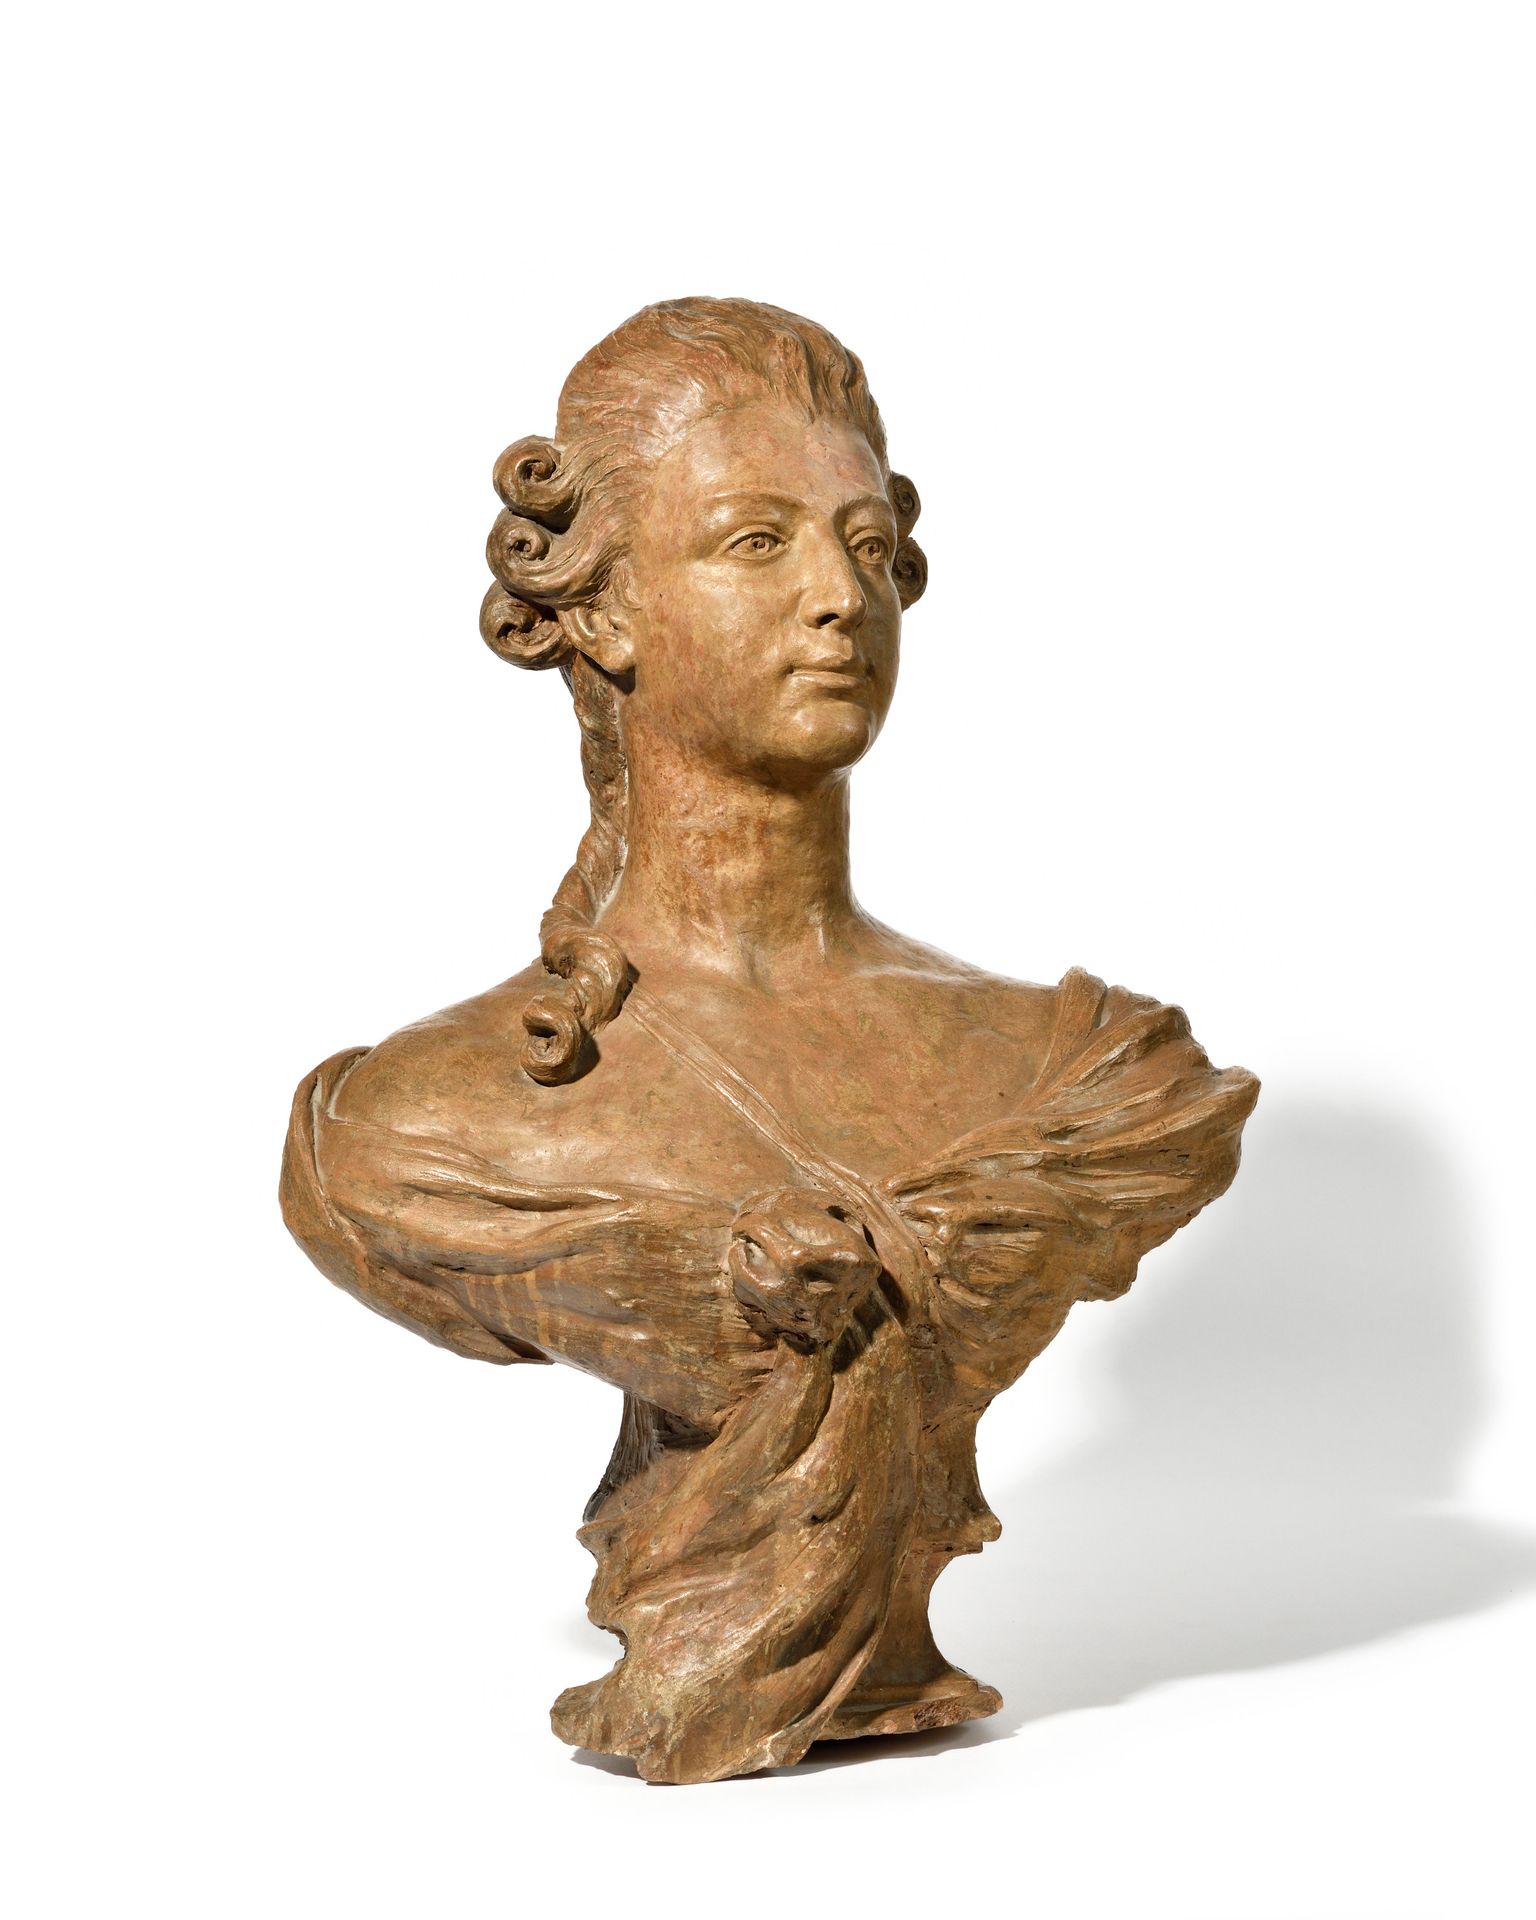 Null 19世纪法国学校的18世纪风格
女人半身像
染色陶土
H.66厘米
底座损坏